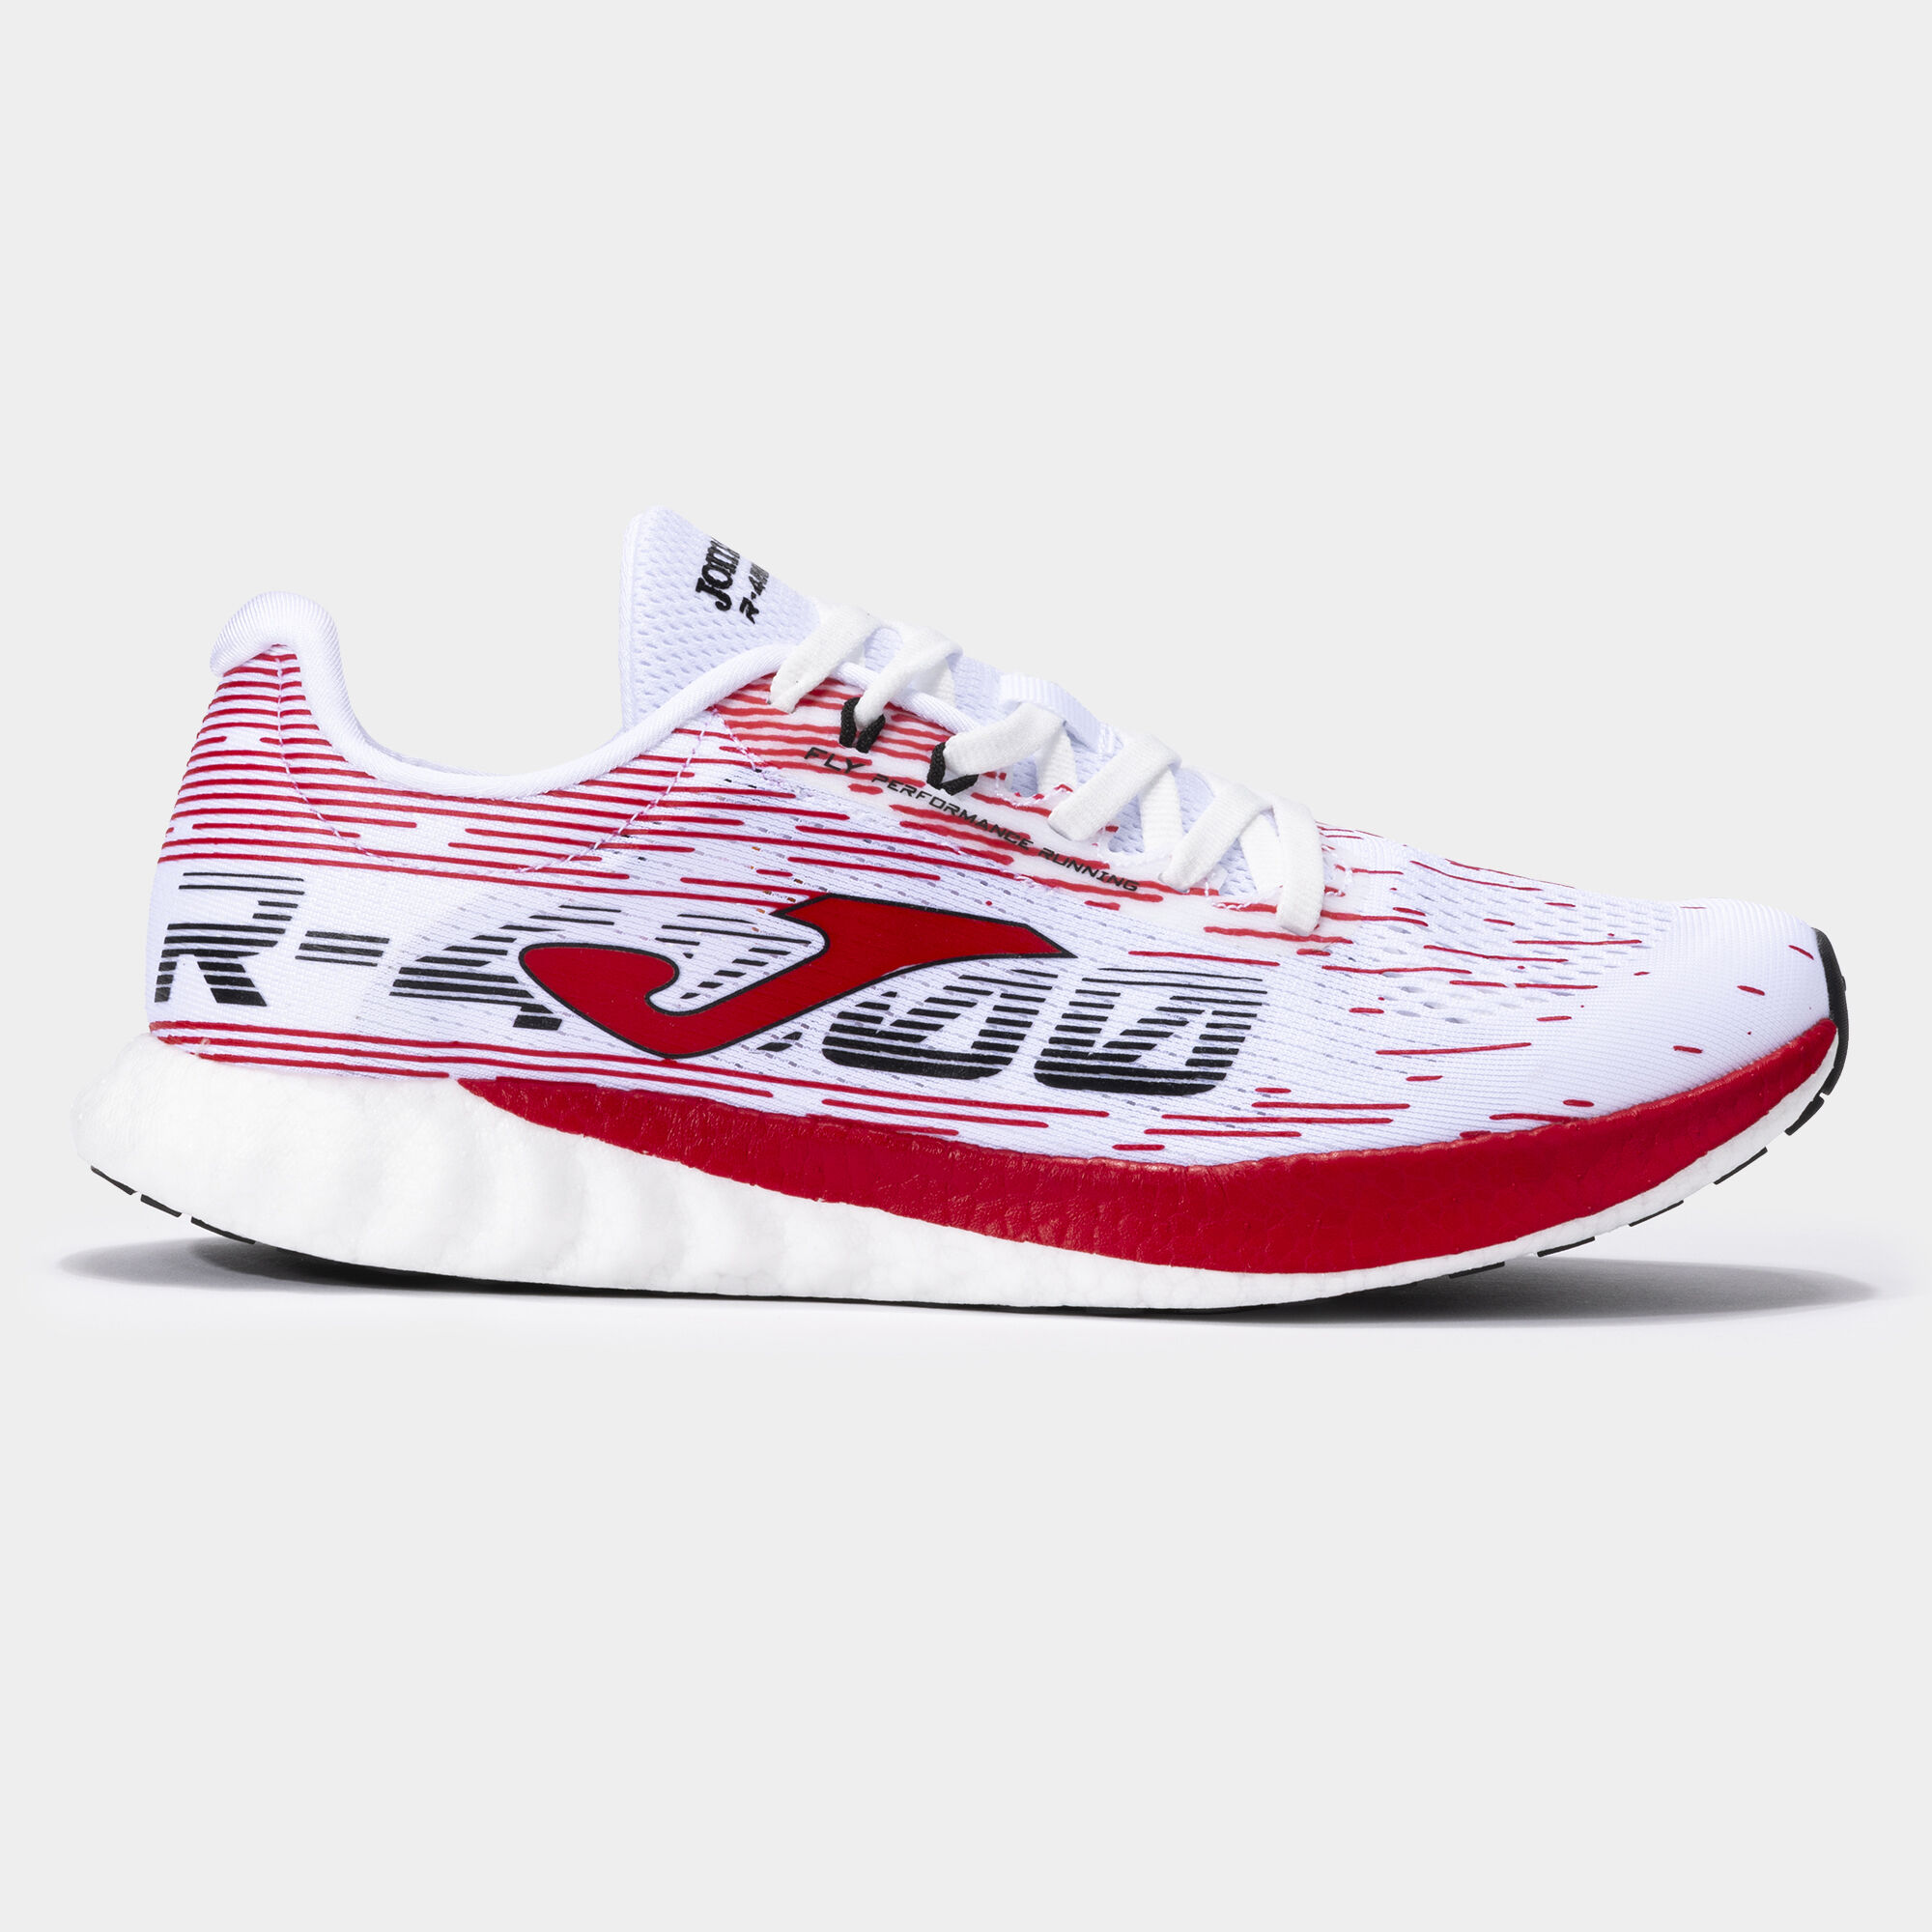 Chaussures running R.4000 24 unisexe blanc rouge